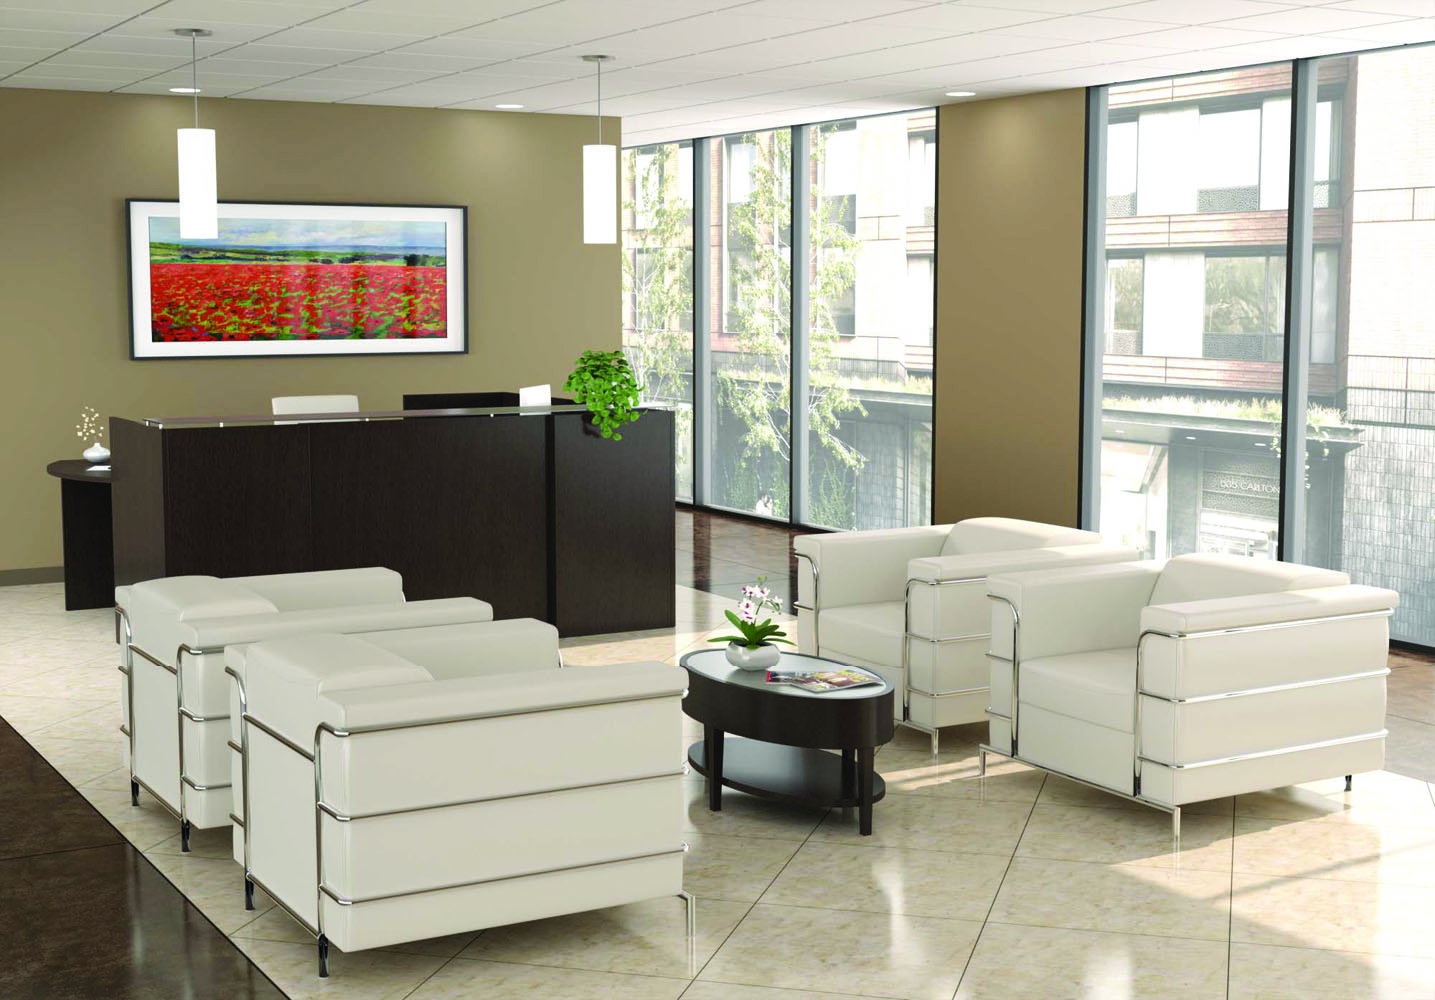 Office Lobby Design - Reception Area Furniture - Office Furniture Sets